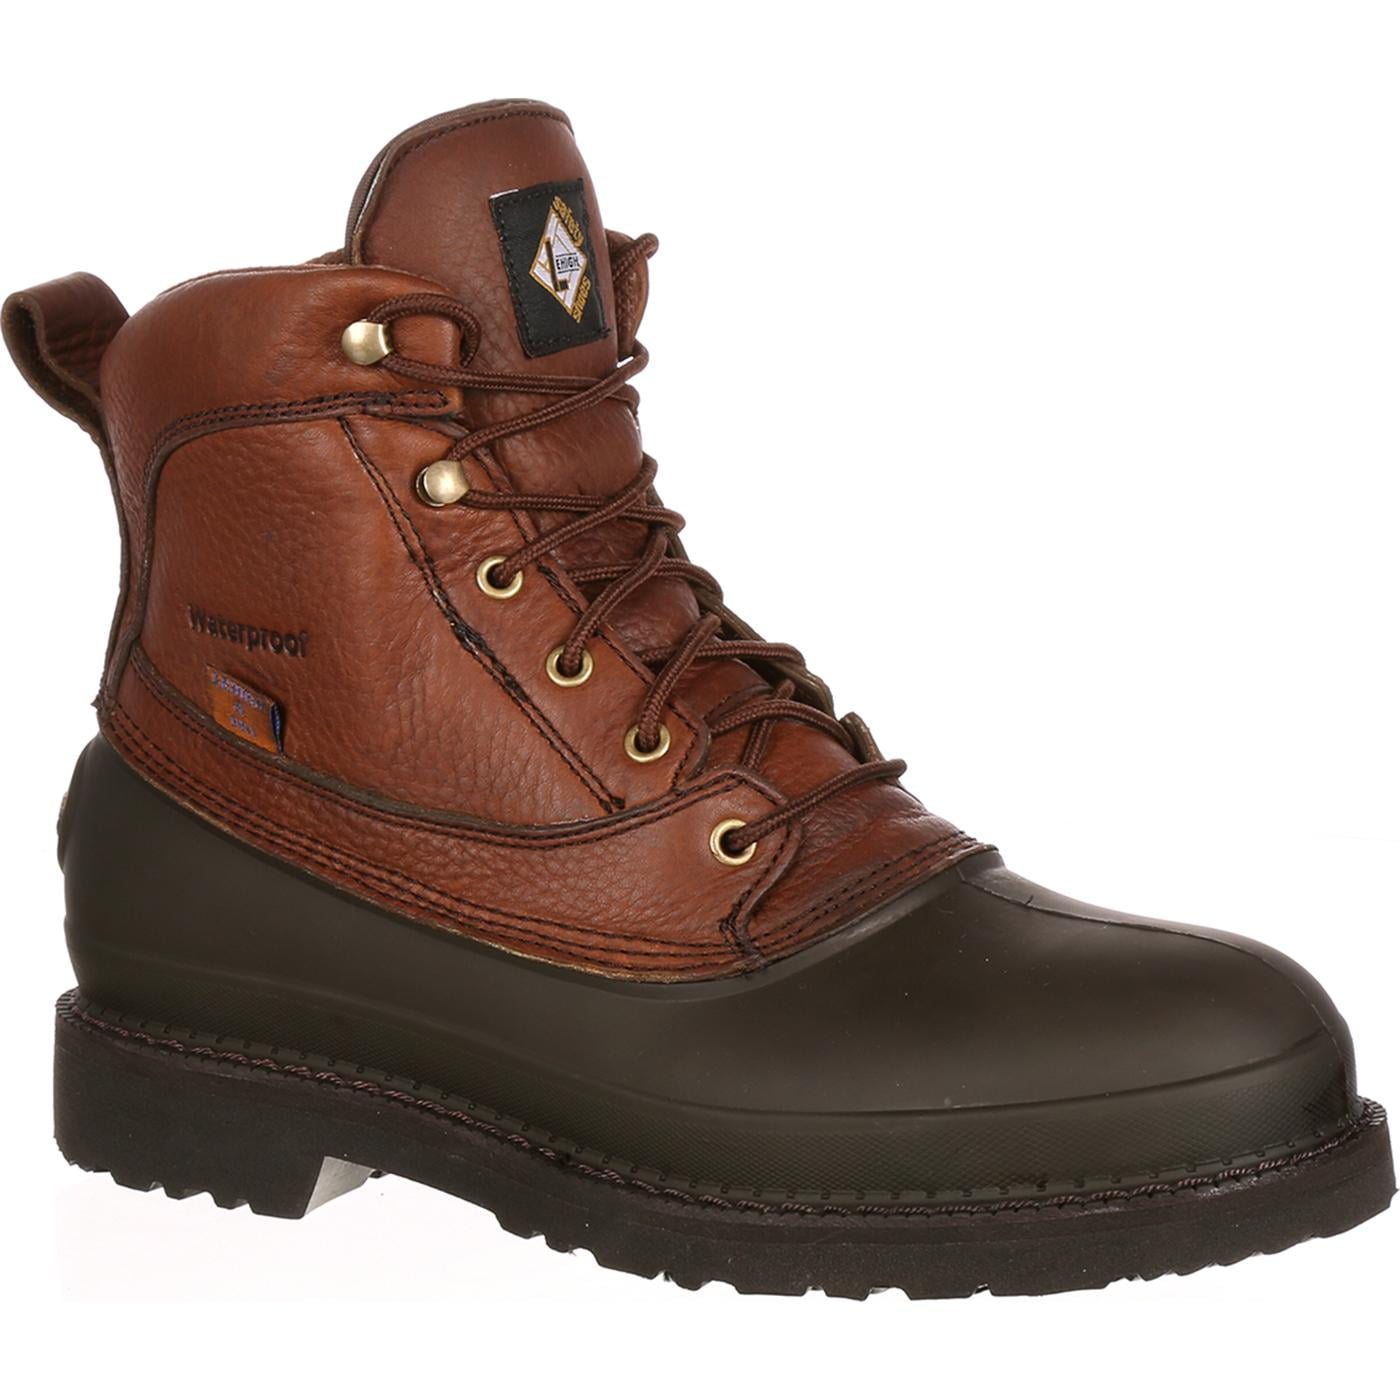 Lehigh Men's 6'' Safety Steel Toe Waterproof Work Boots Black Leather Size 10 3E